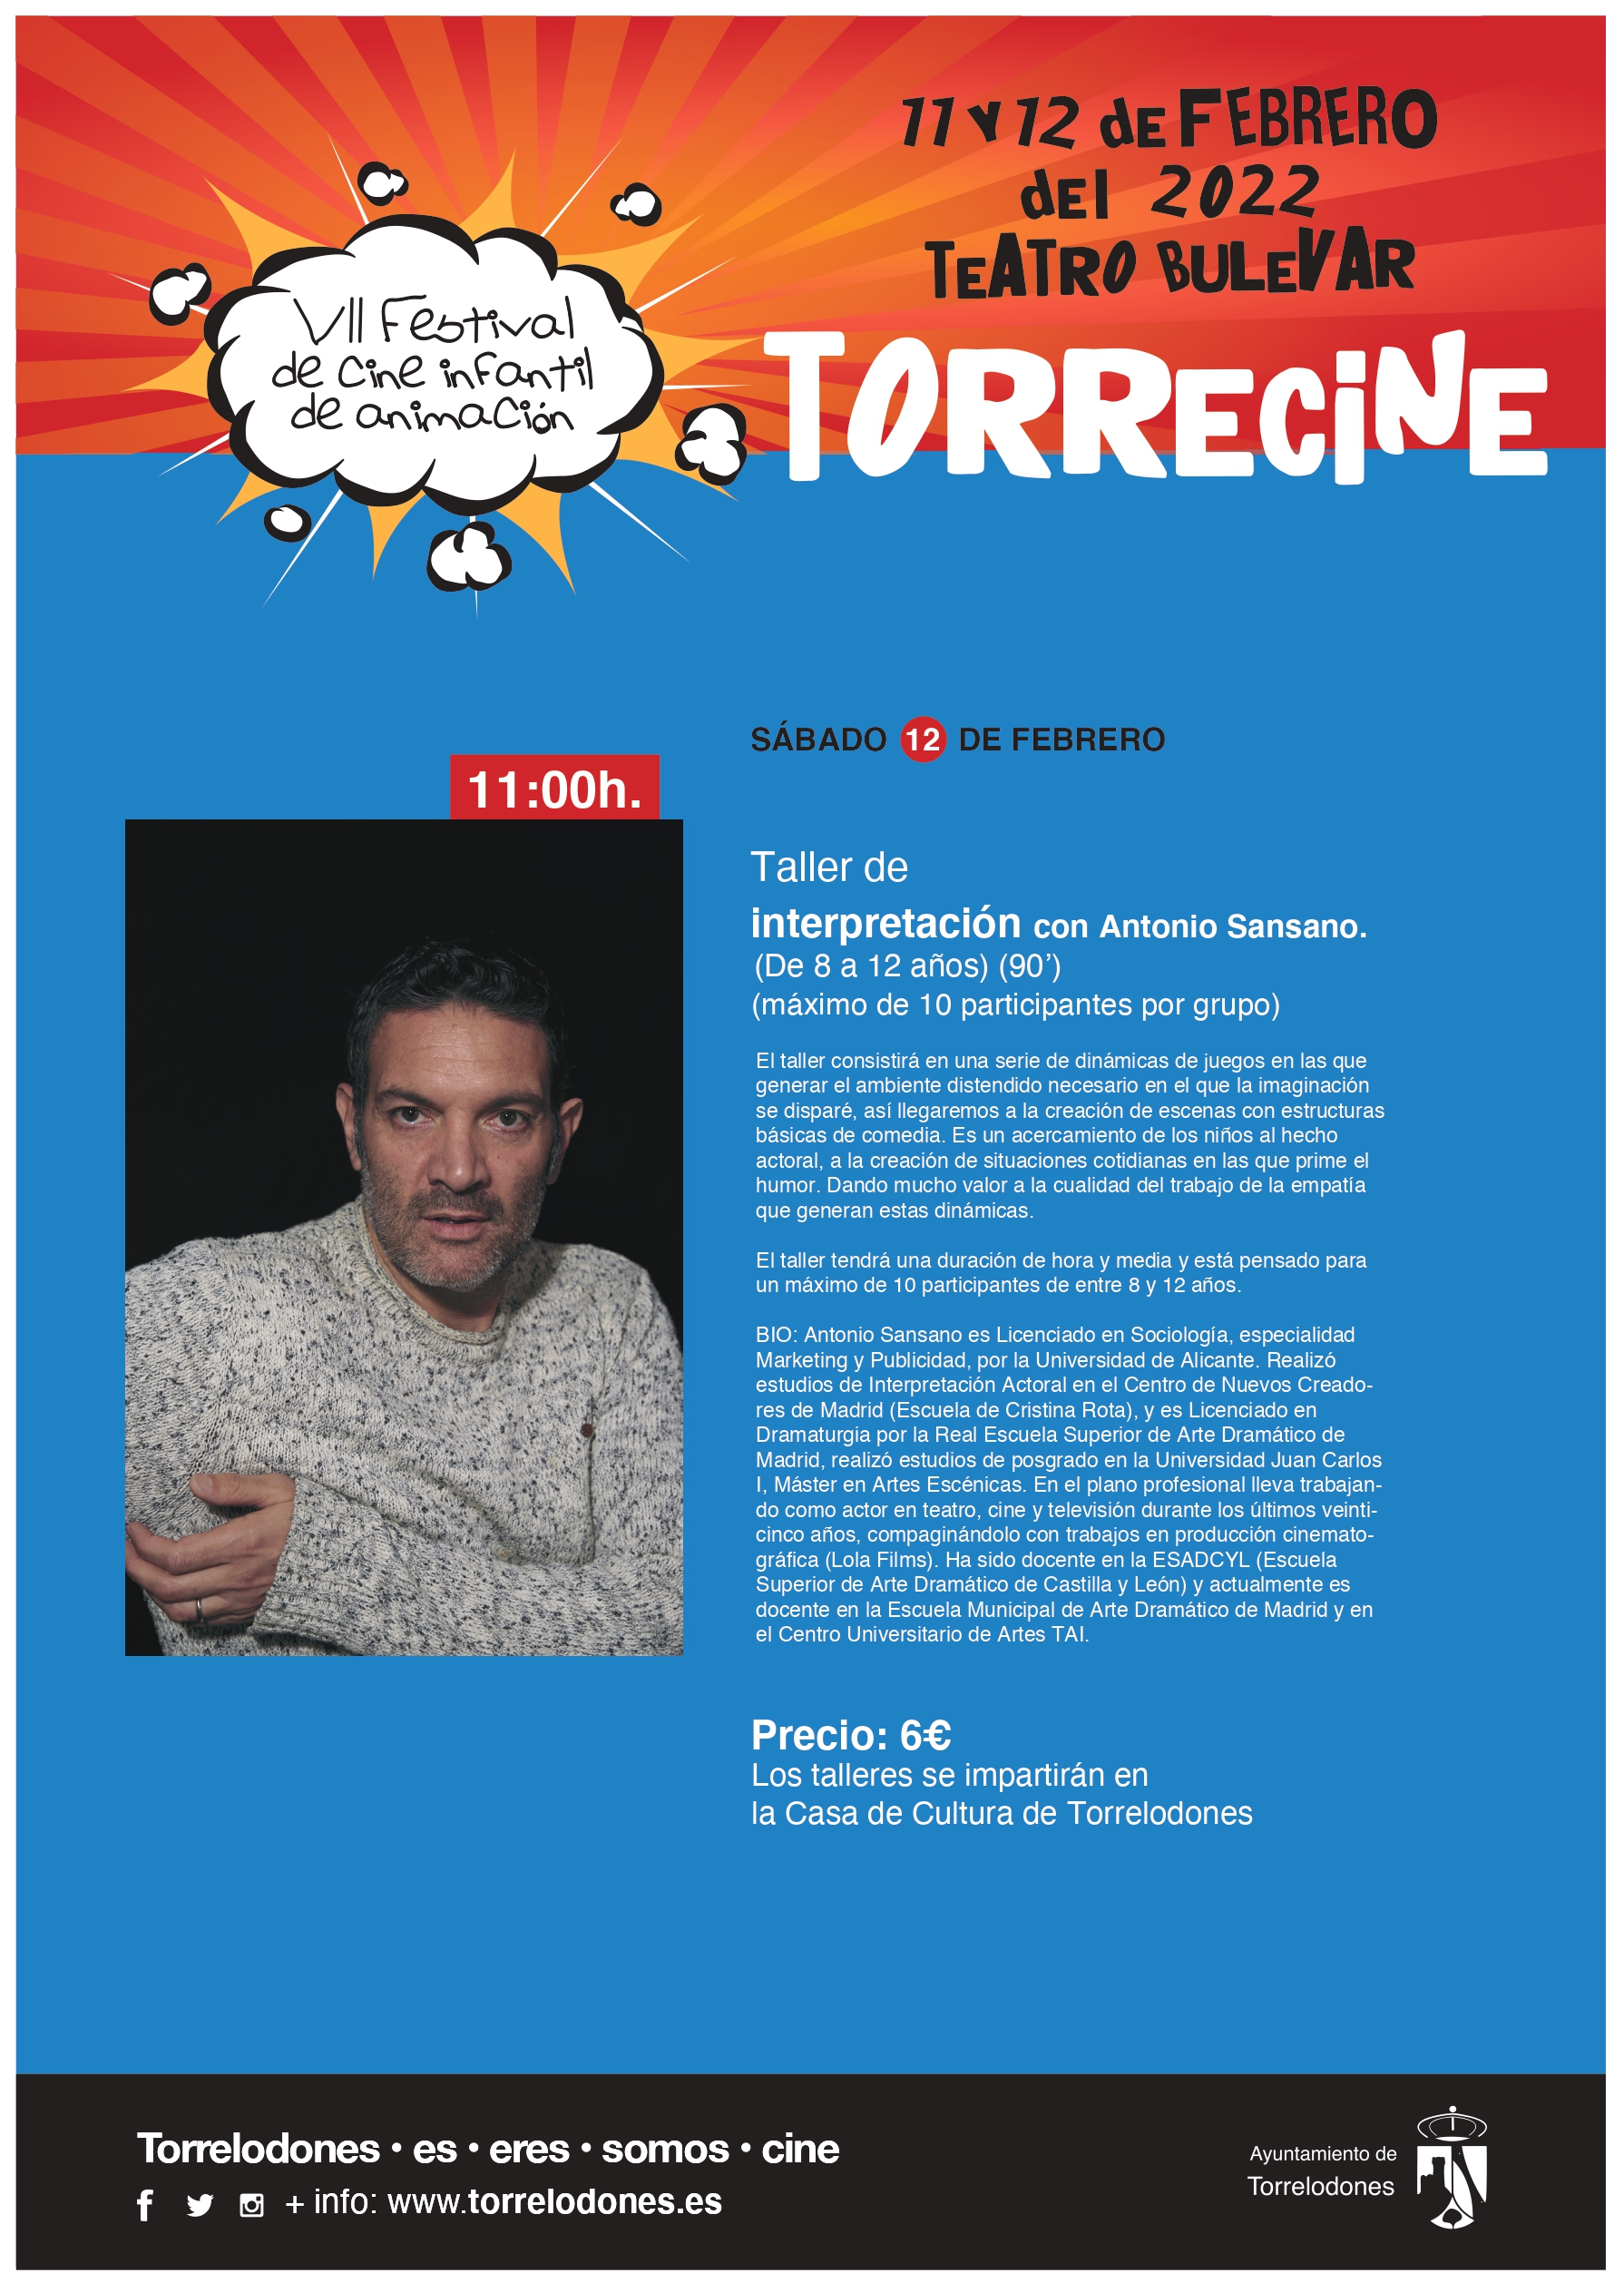 torrecine 18 01 22 6 1 page 0001